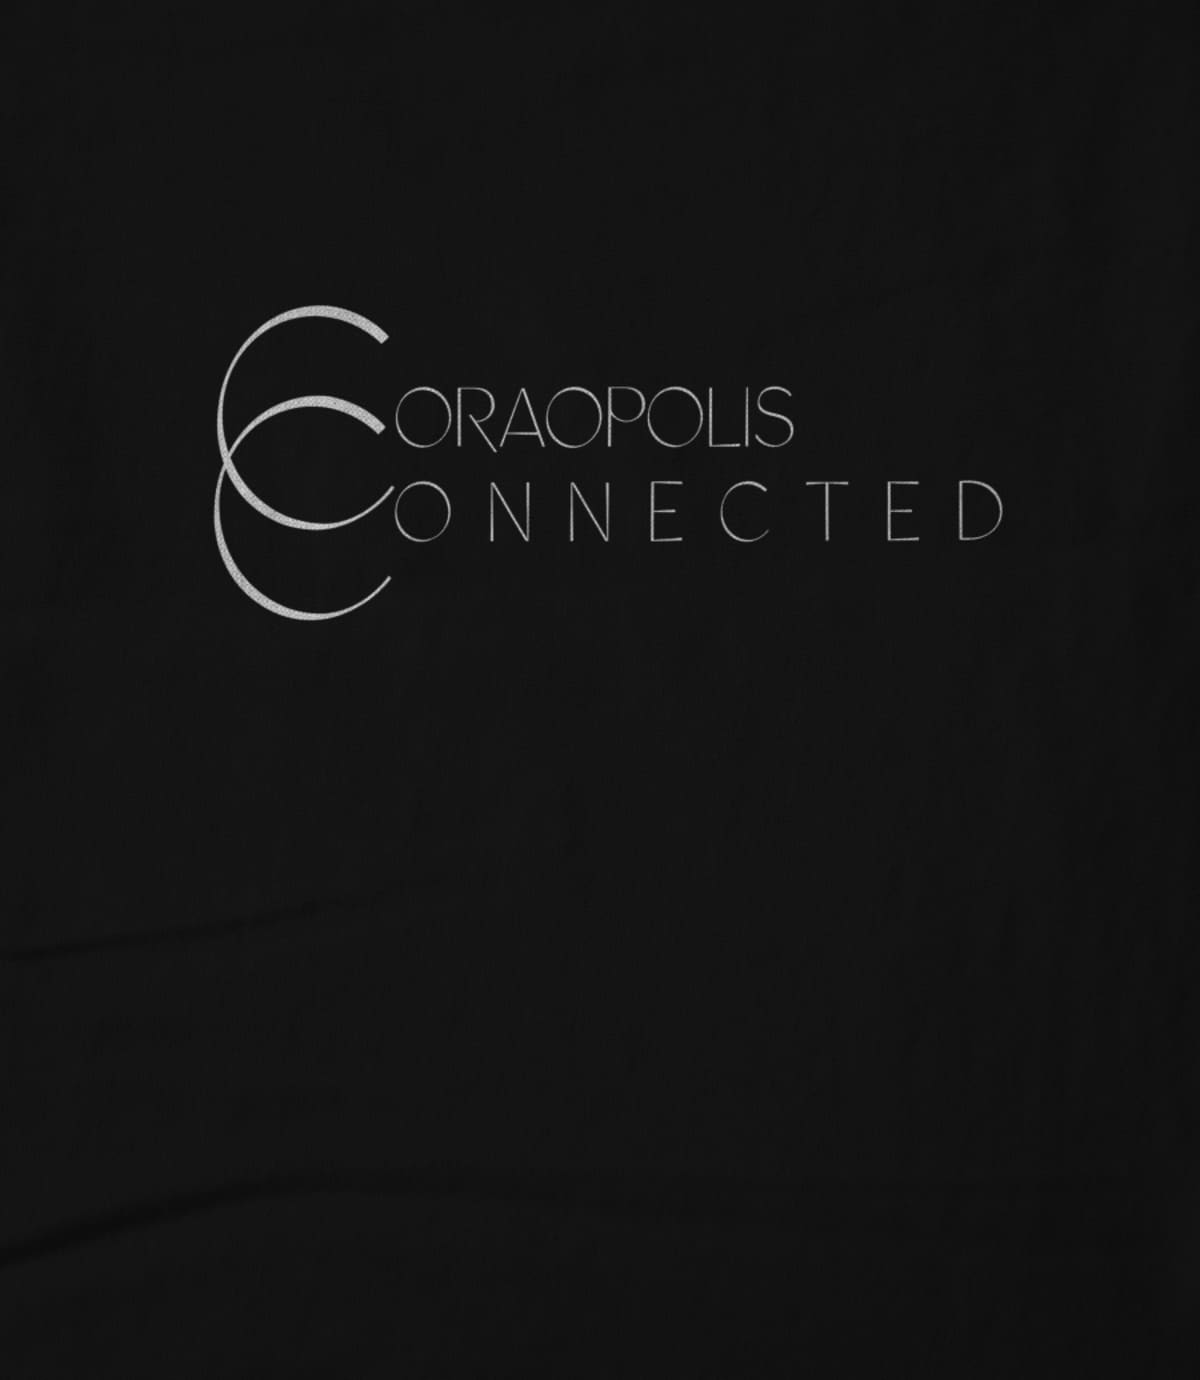 Coraopolis connected design 1 1627478700